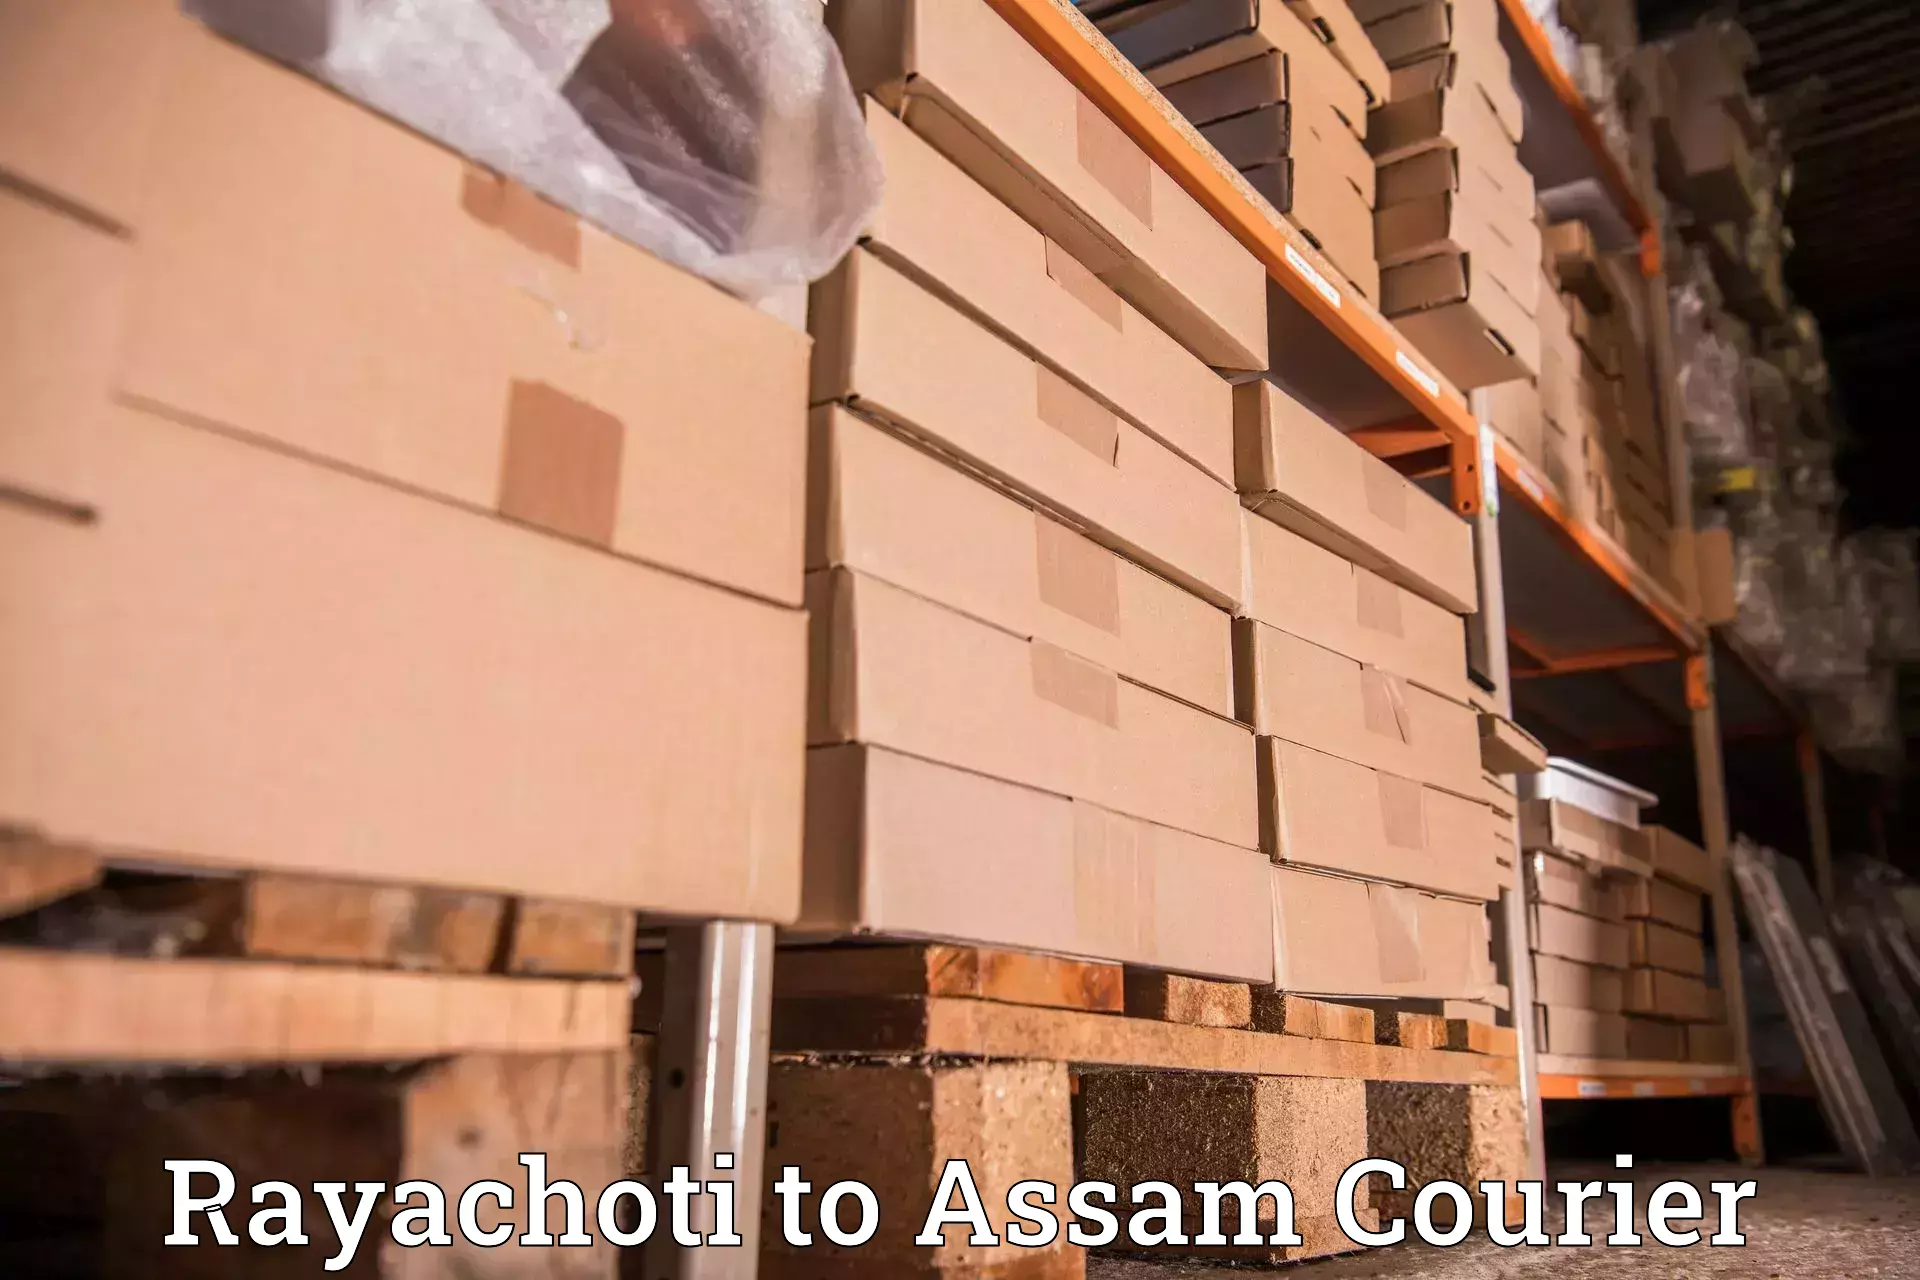 State-of-the-art courier technology Rayachoti to Mayang